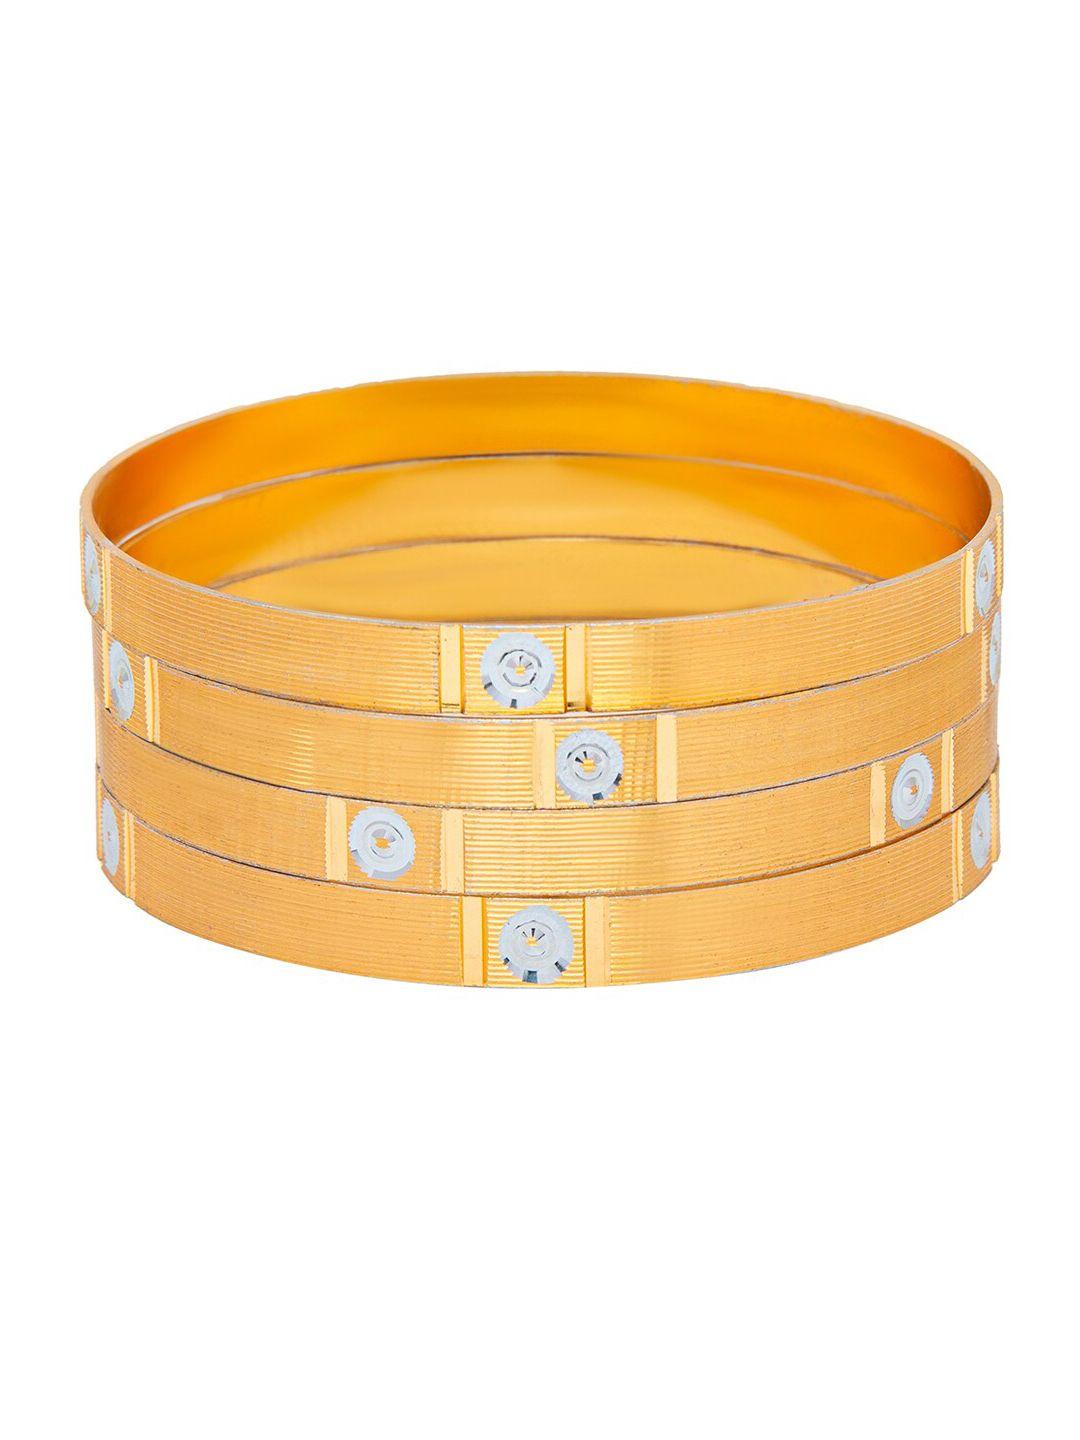 shining jewel - by shivansh set of 2 gold-plated gold-toned designer bangle